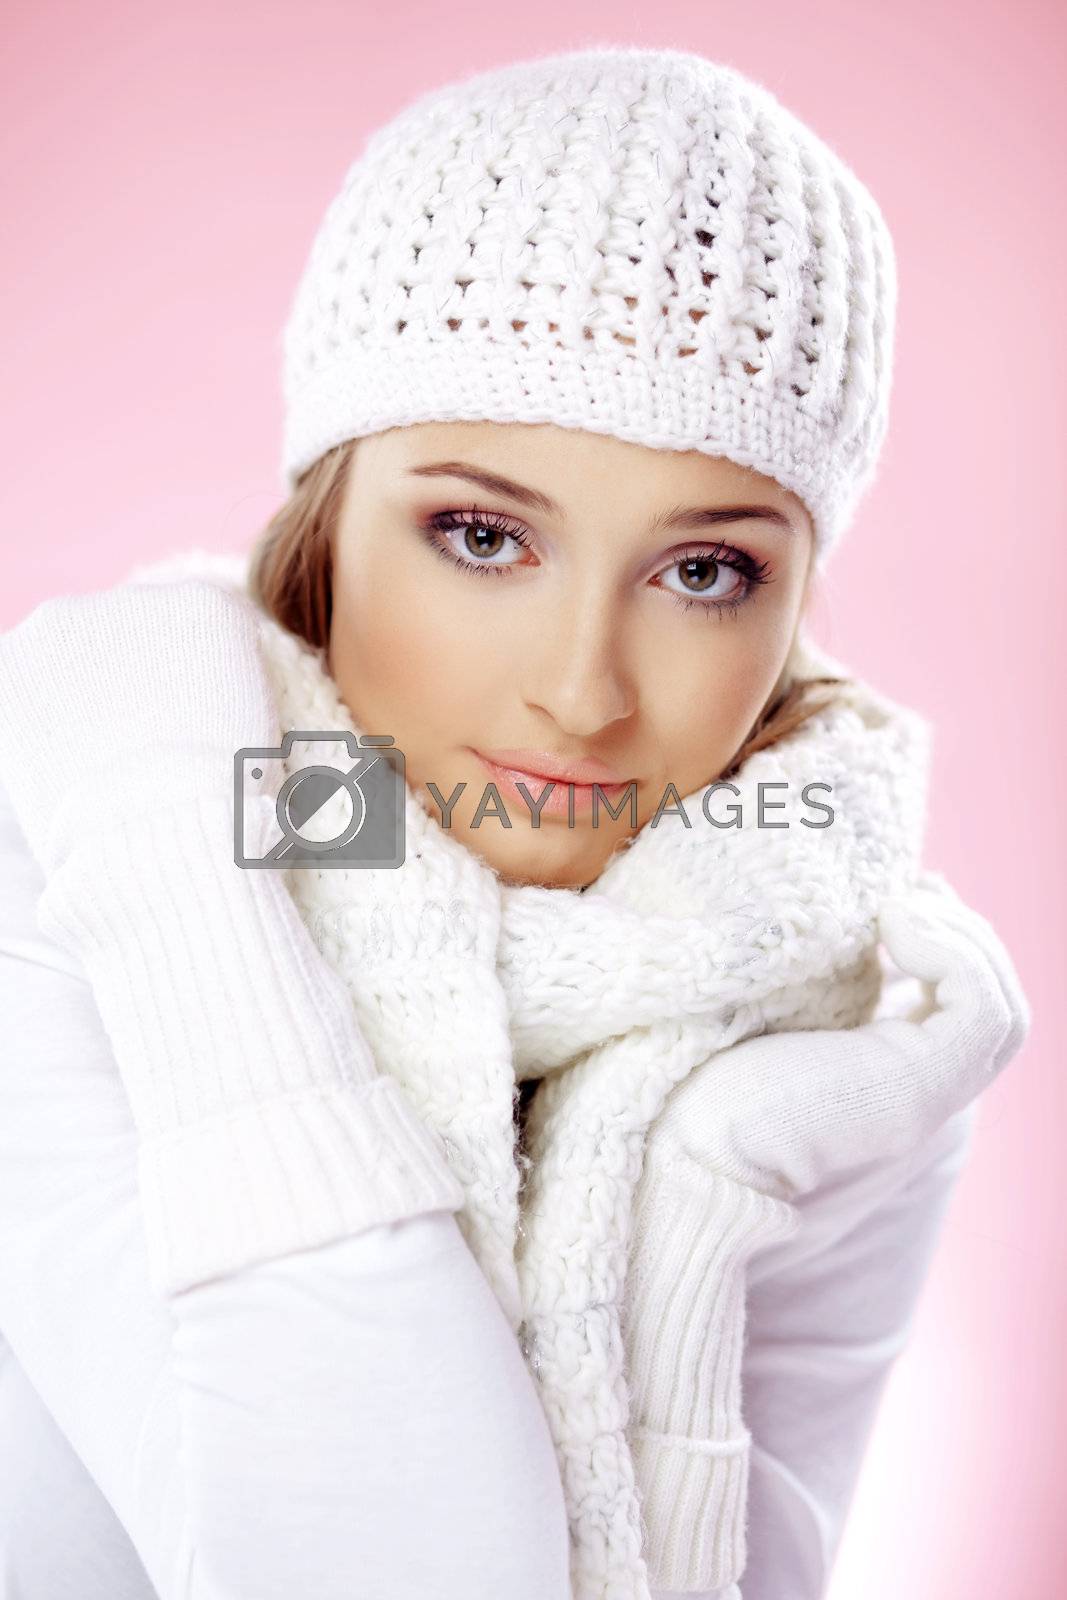 Royalty free image of Fashion winter woman by alenkasm